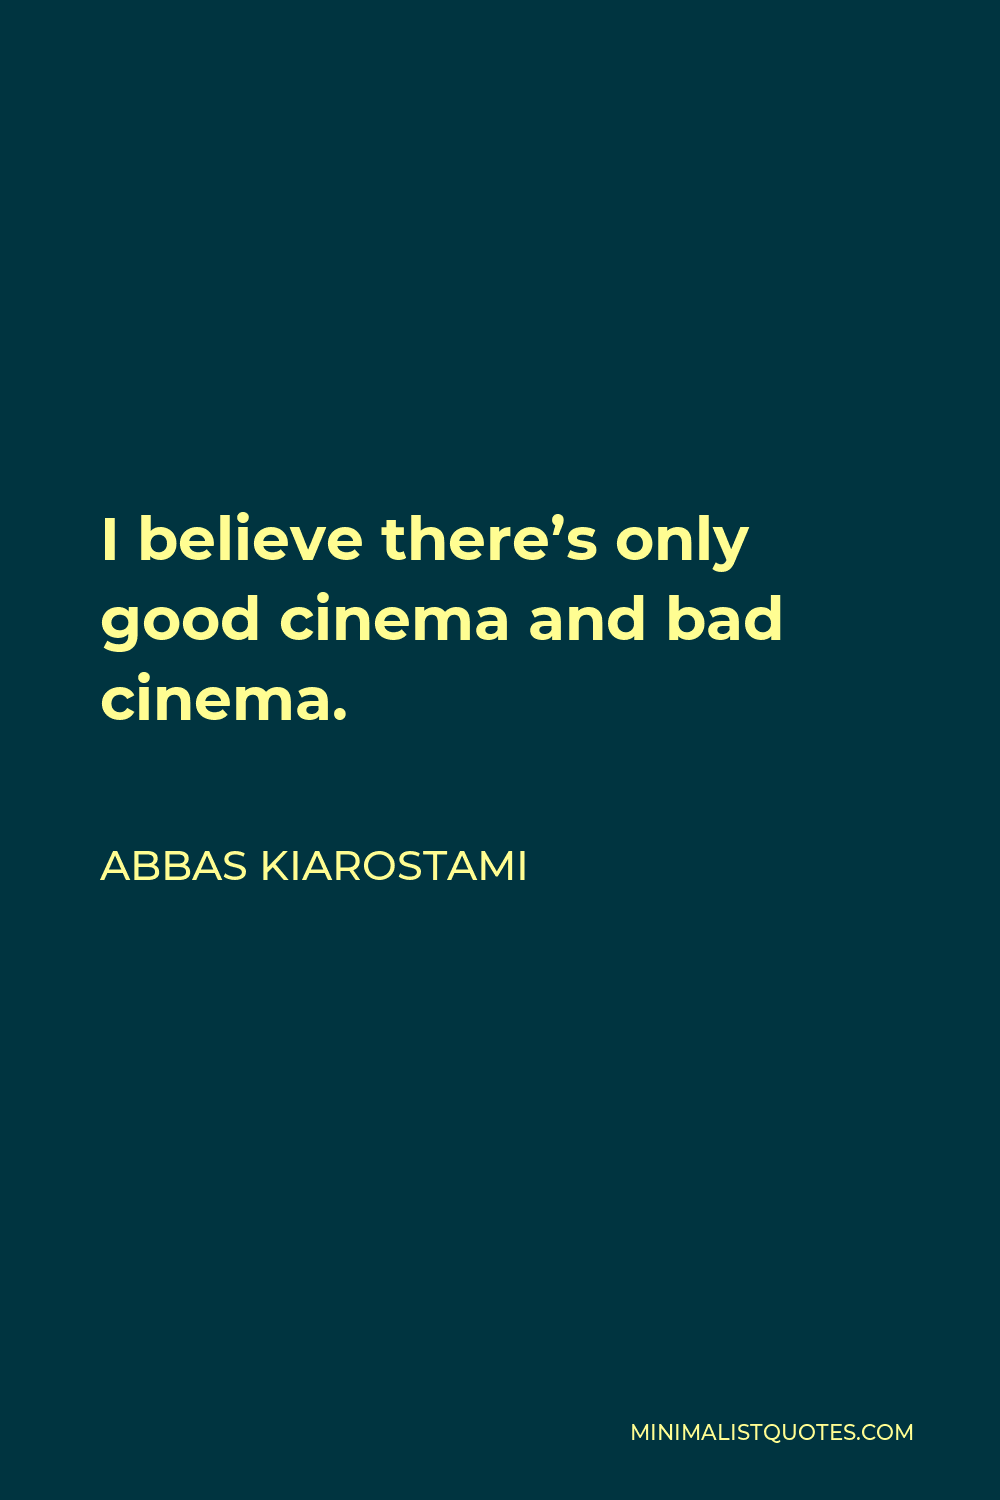 Abbas Kiarostami Quote - I believe there’s only good cinema and bad cinema.